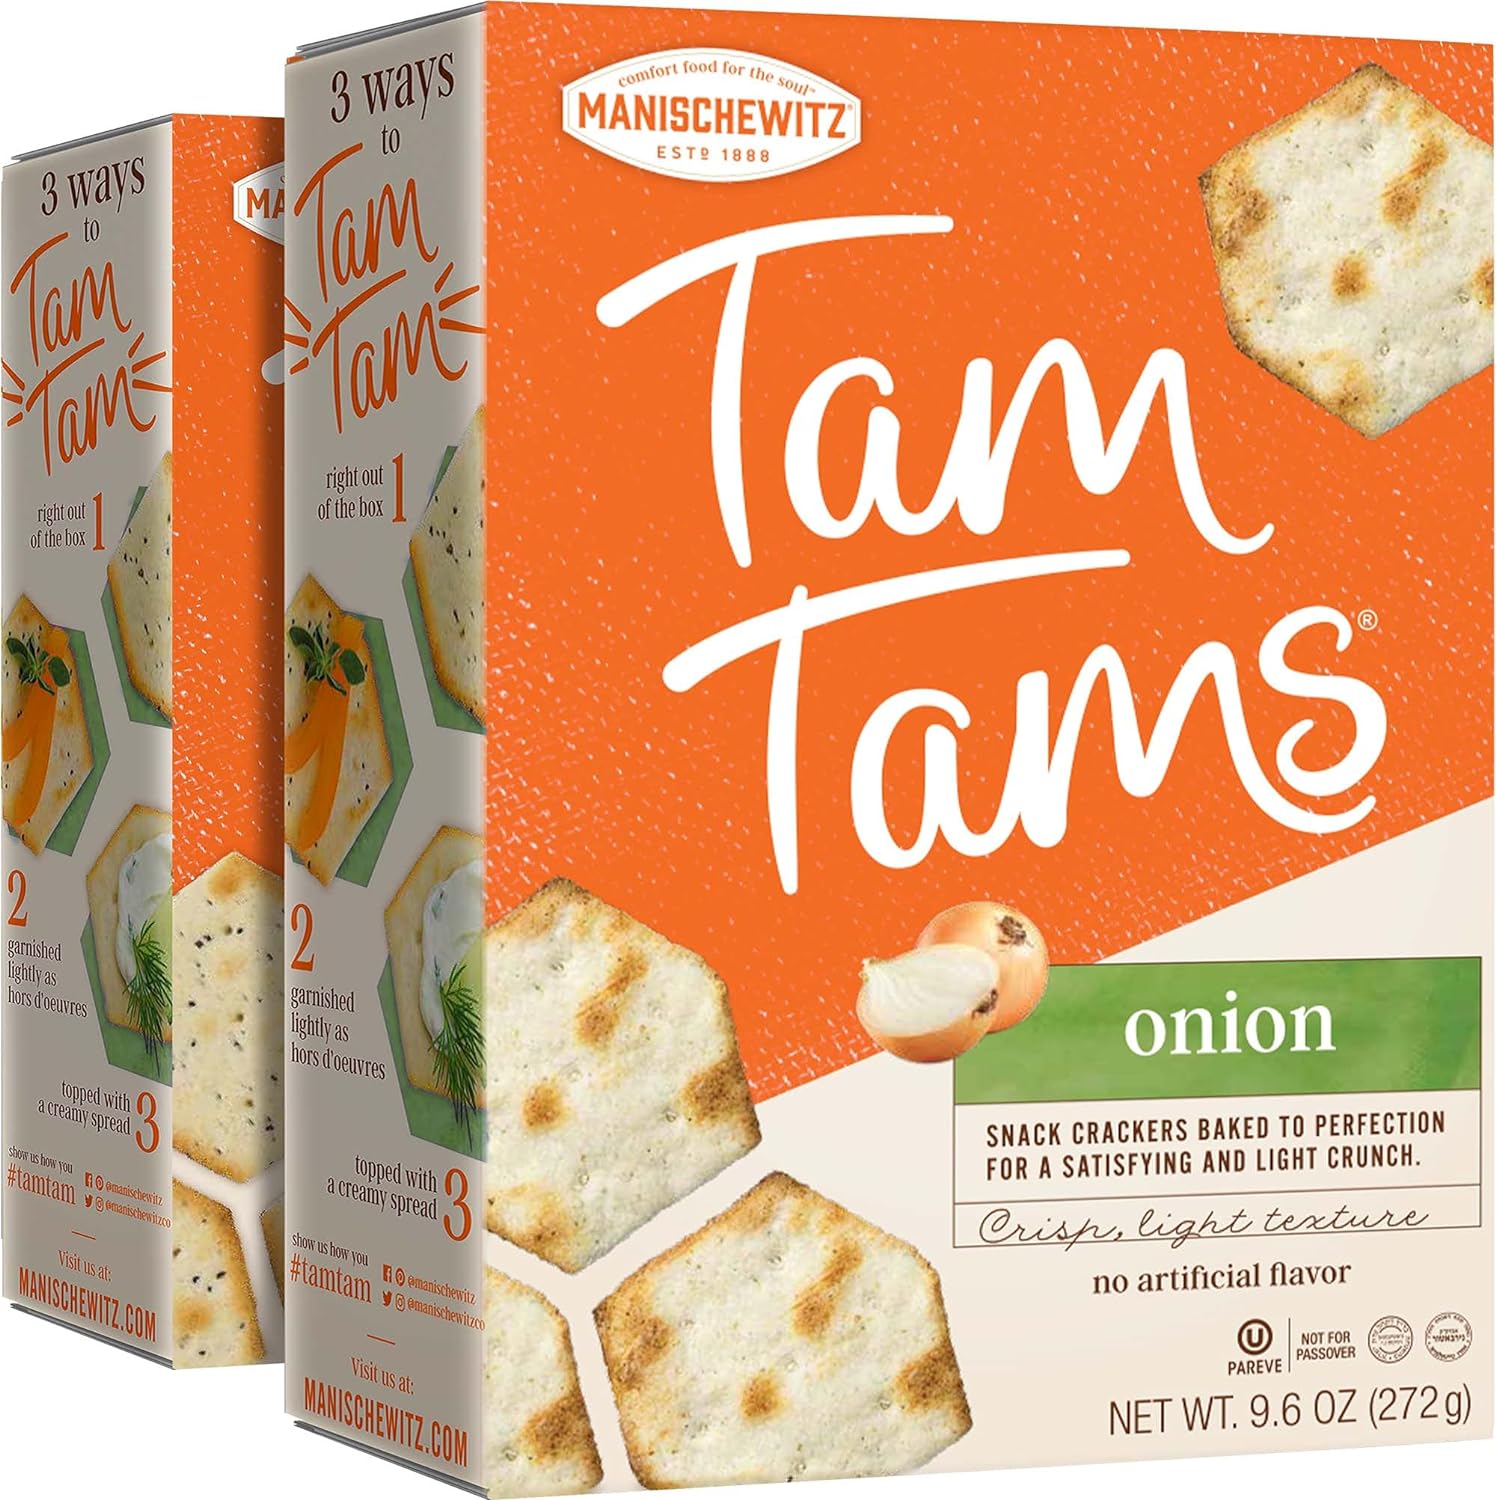 Manischewitz Tam Tam Onion Crackers 9.6oz (2 Pack), Crisp & Light Texture, Baked to Perfection